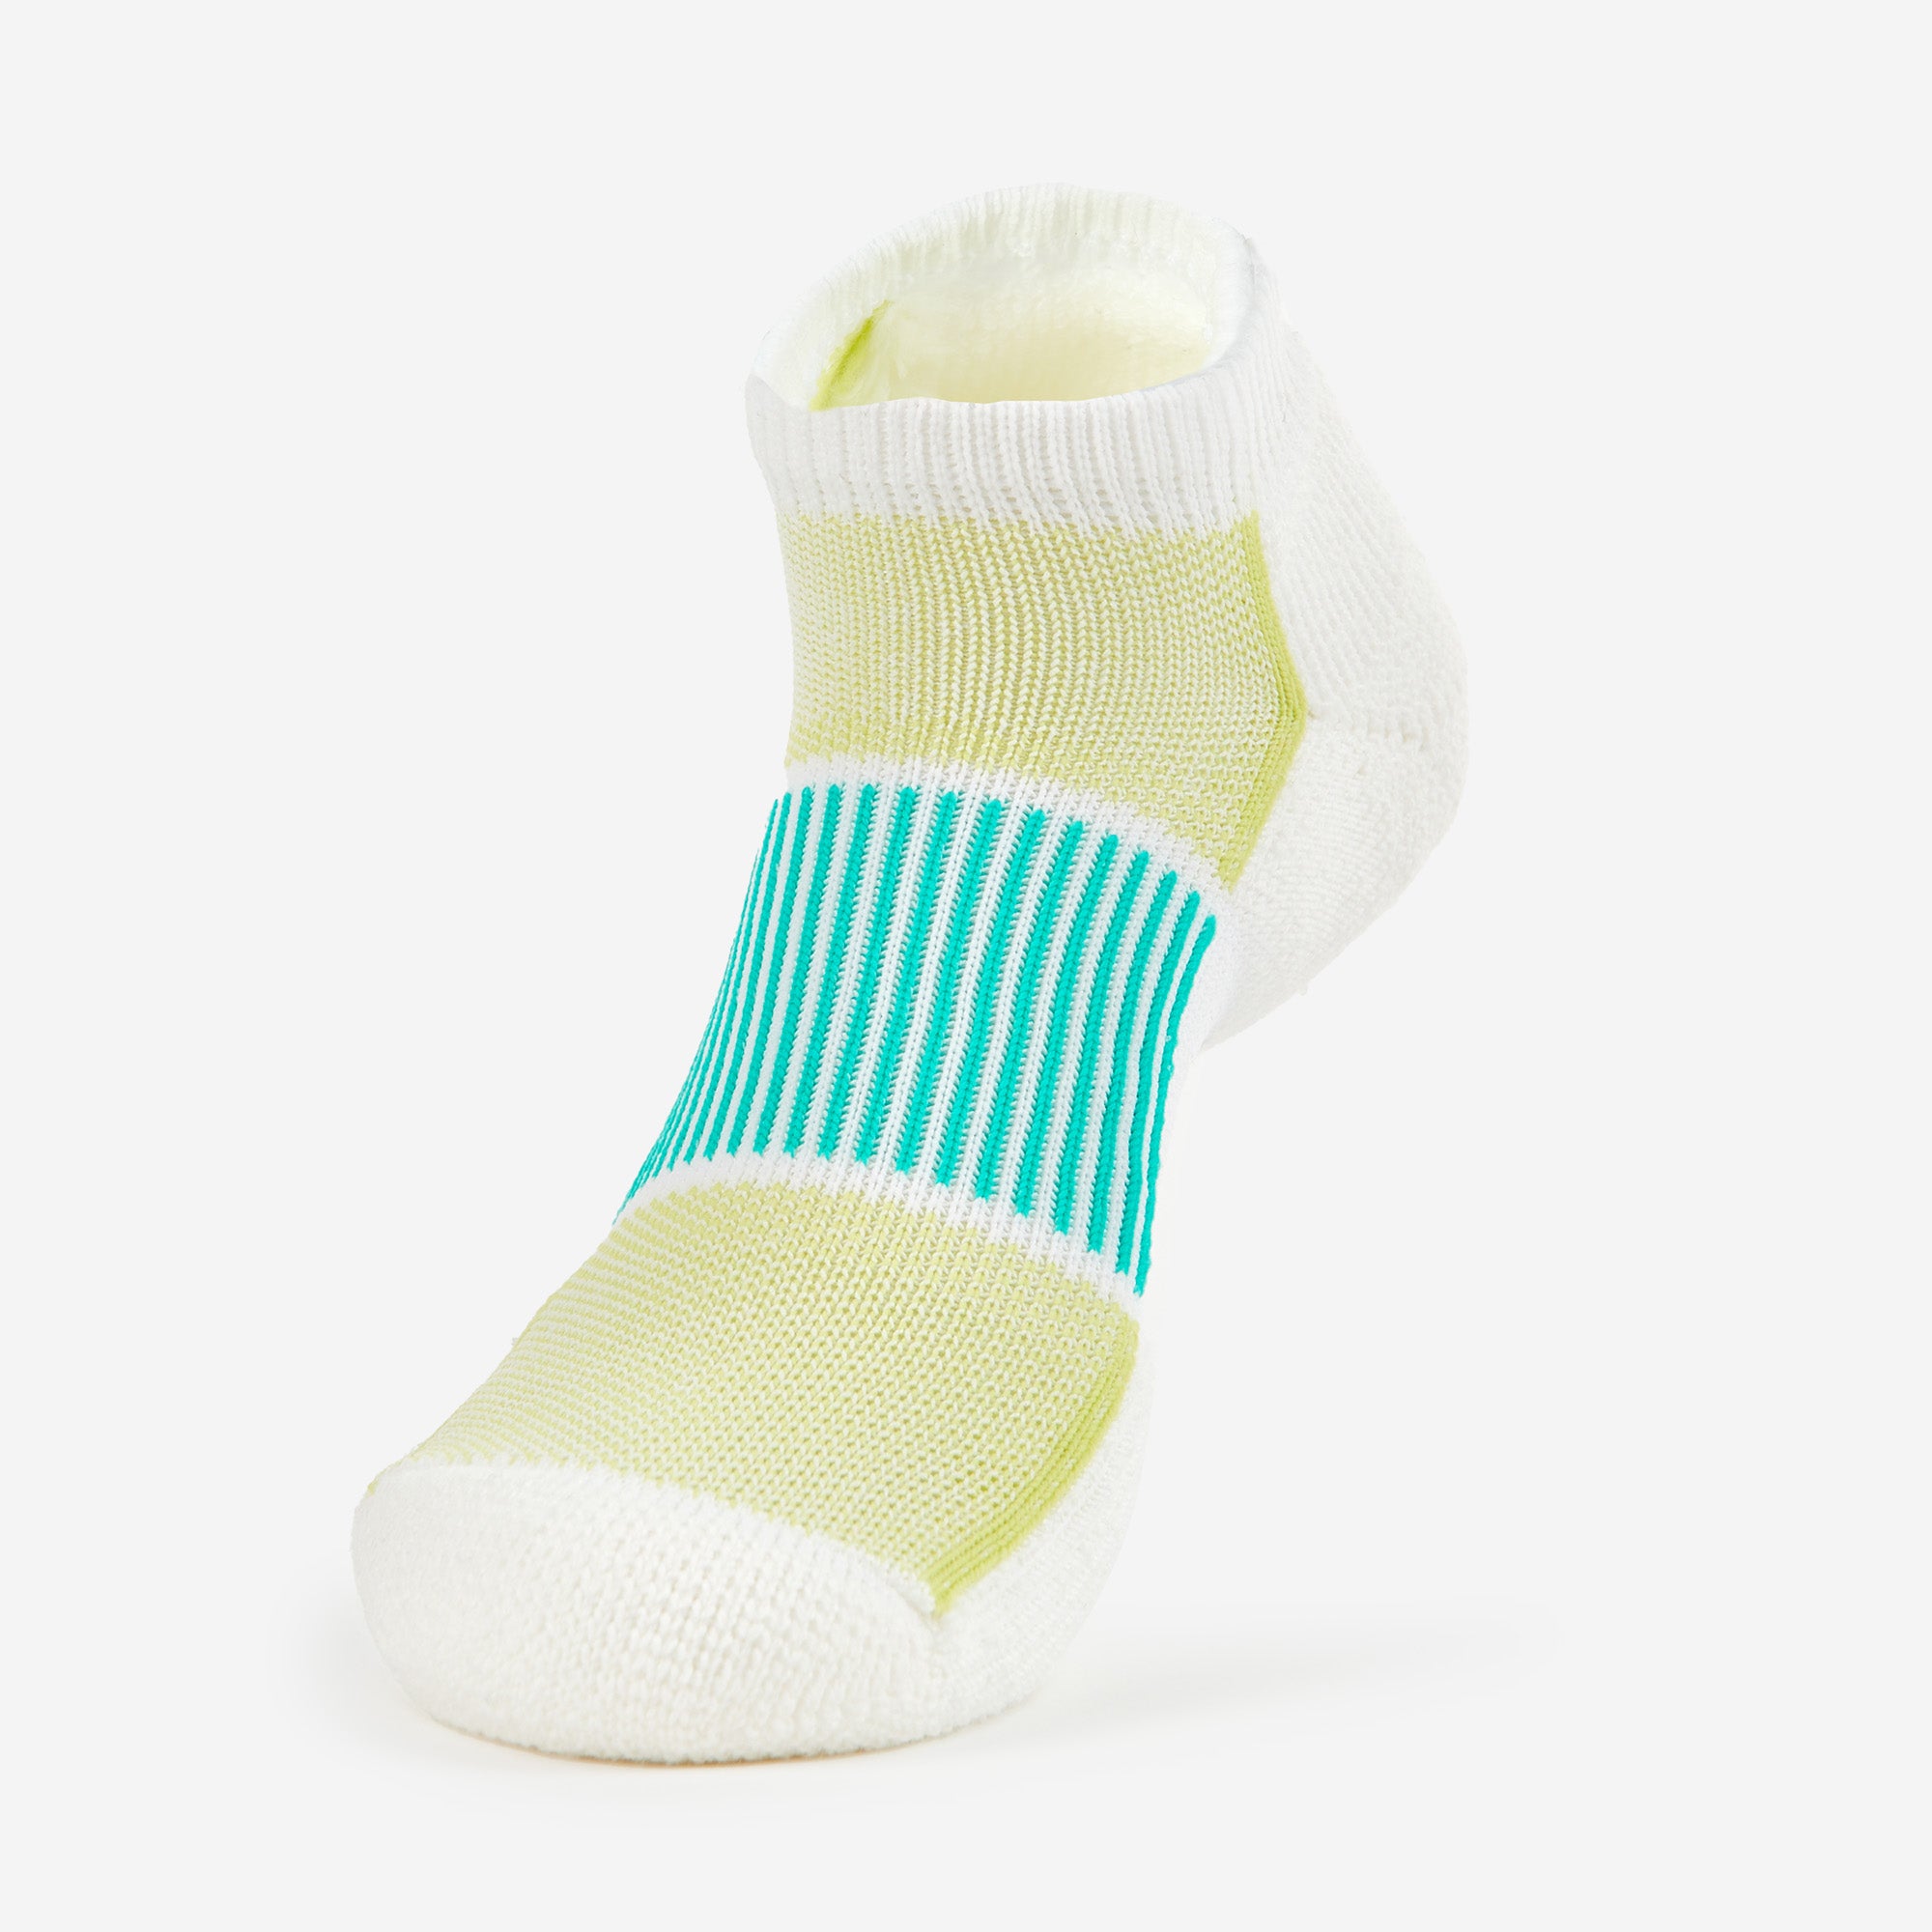 Women's Maximum Cushion Socks: Extra-Thick Padding